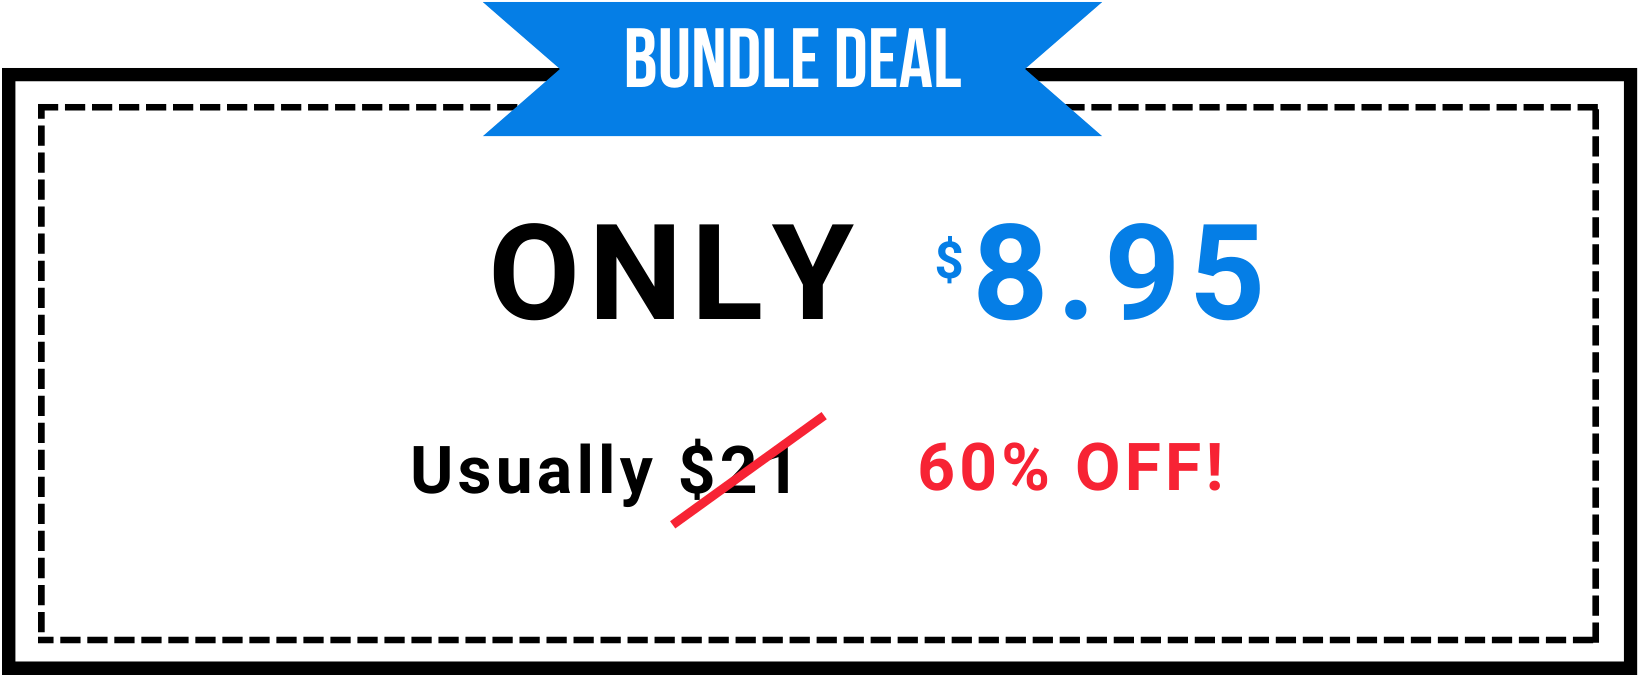 Bundle deal $8.95